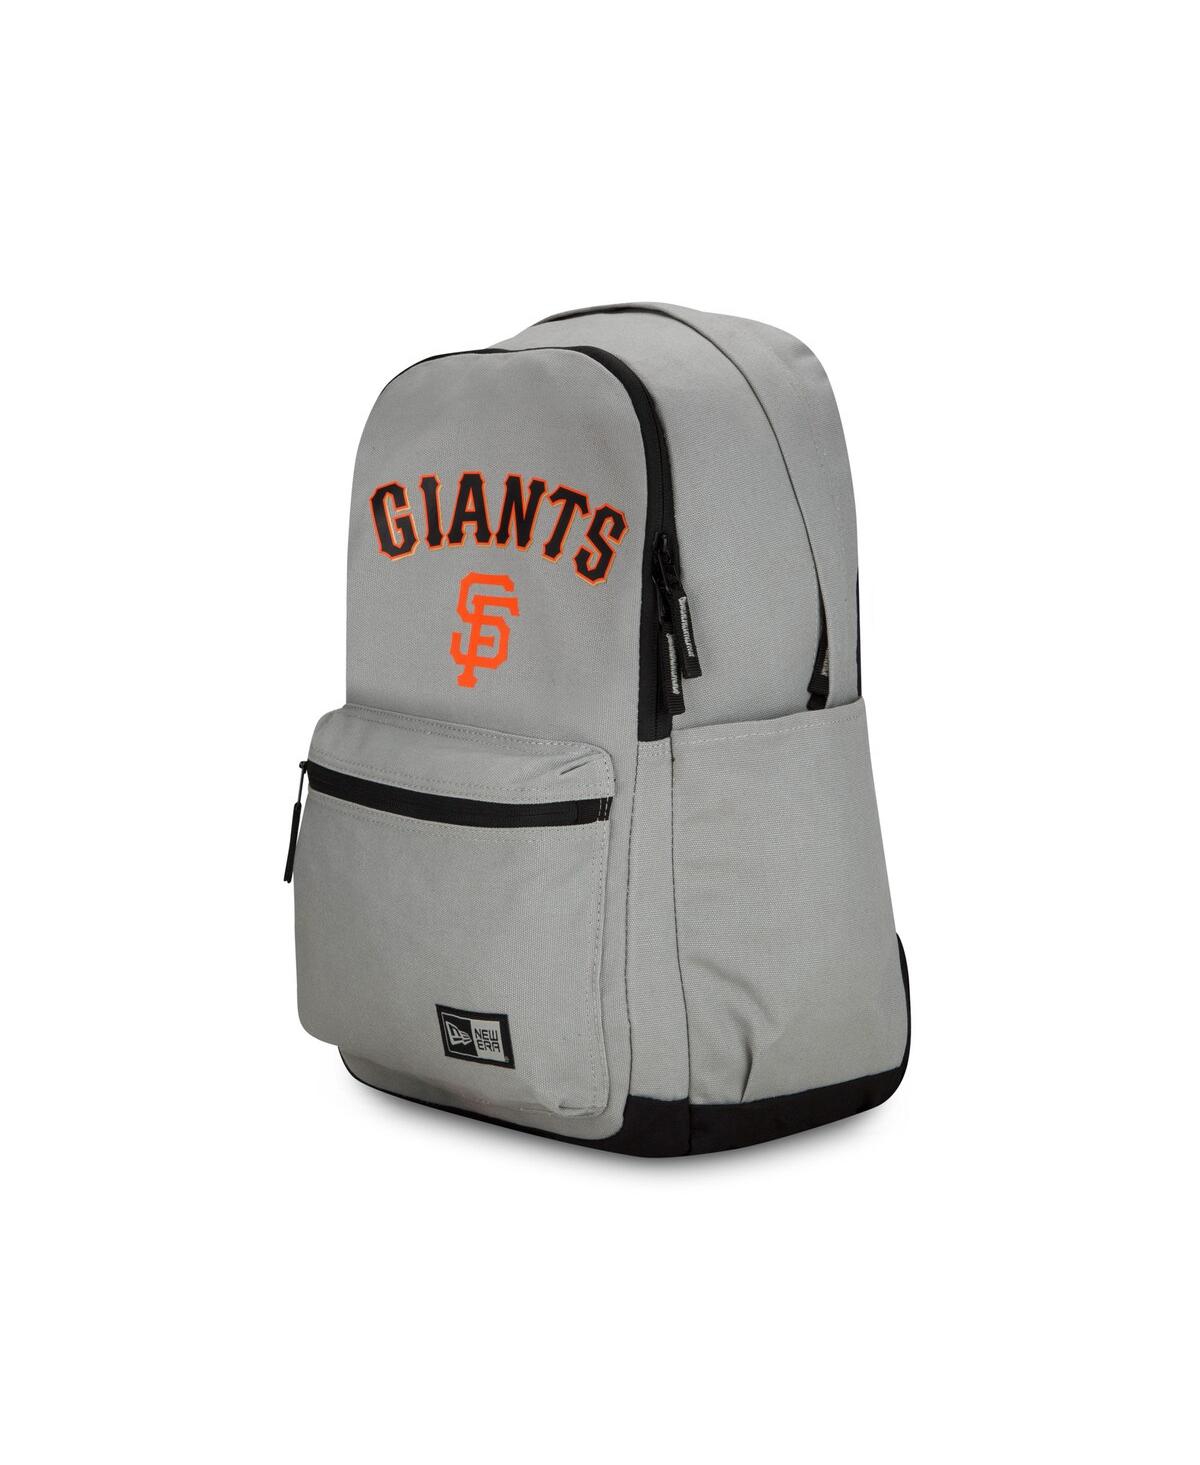 Men's and Women's New Era San Francisco Giants Throwback Backpack - Gray